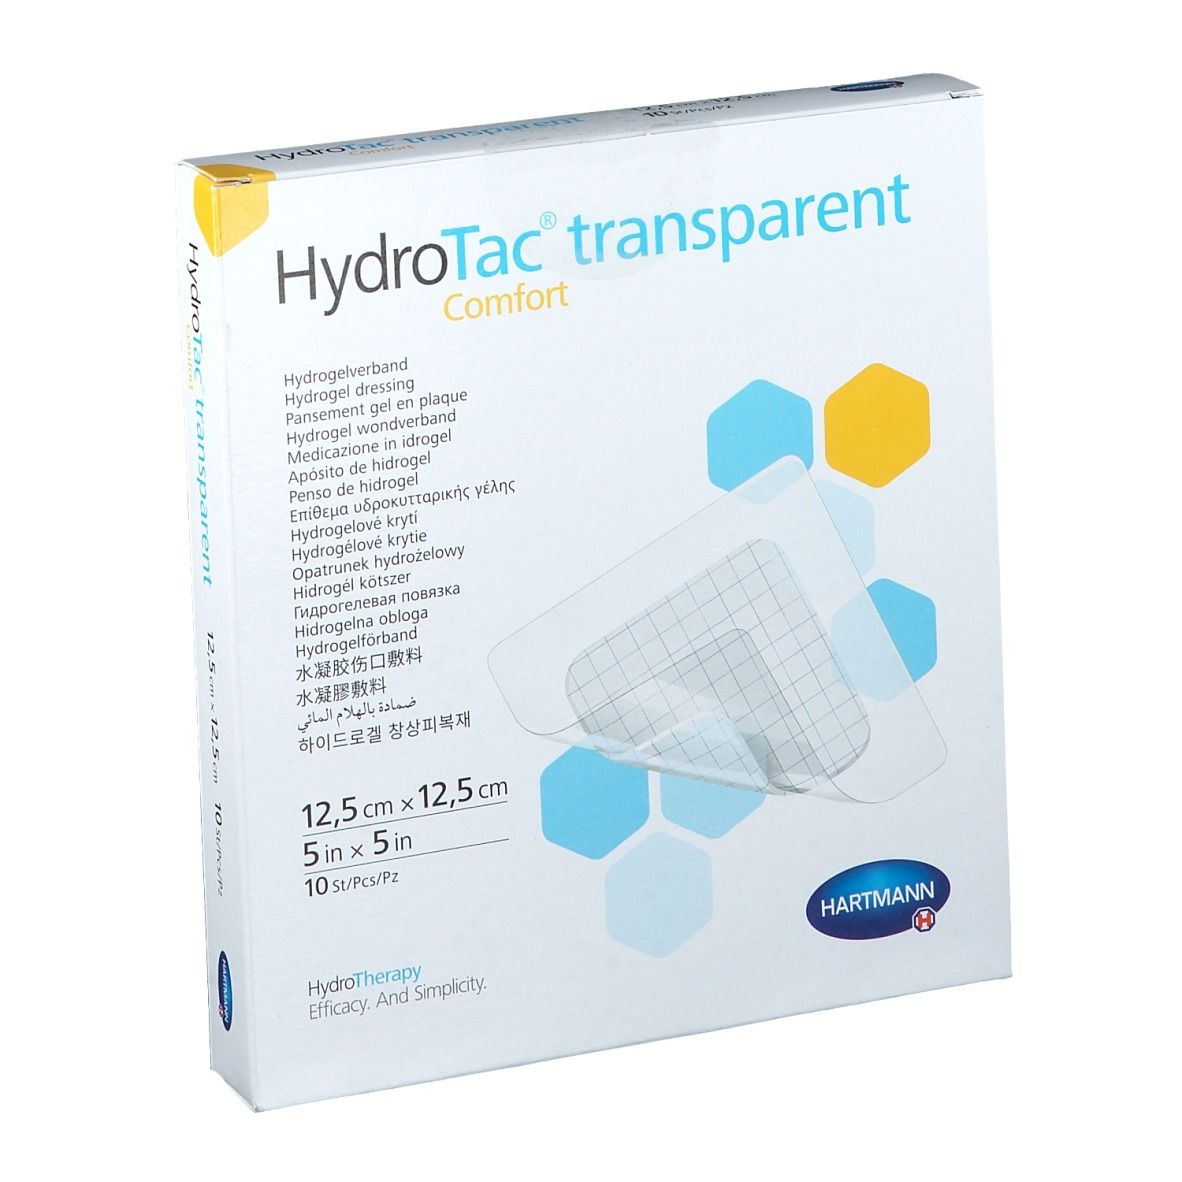 HydroTac® transparent comfort 12,5 x 12,5 cm